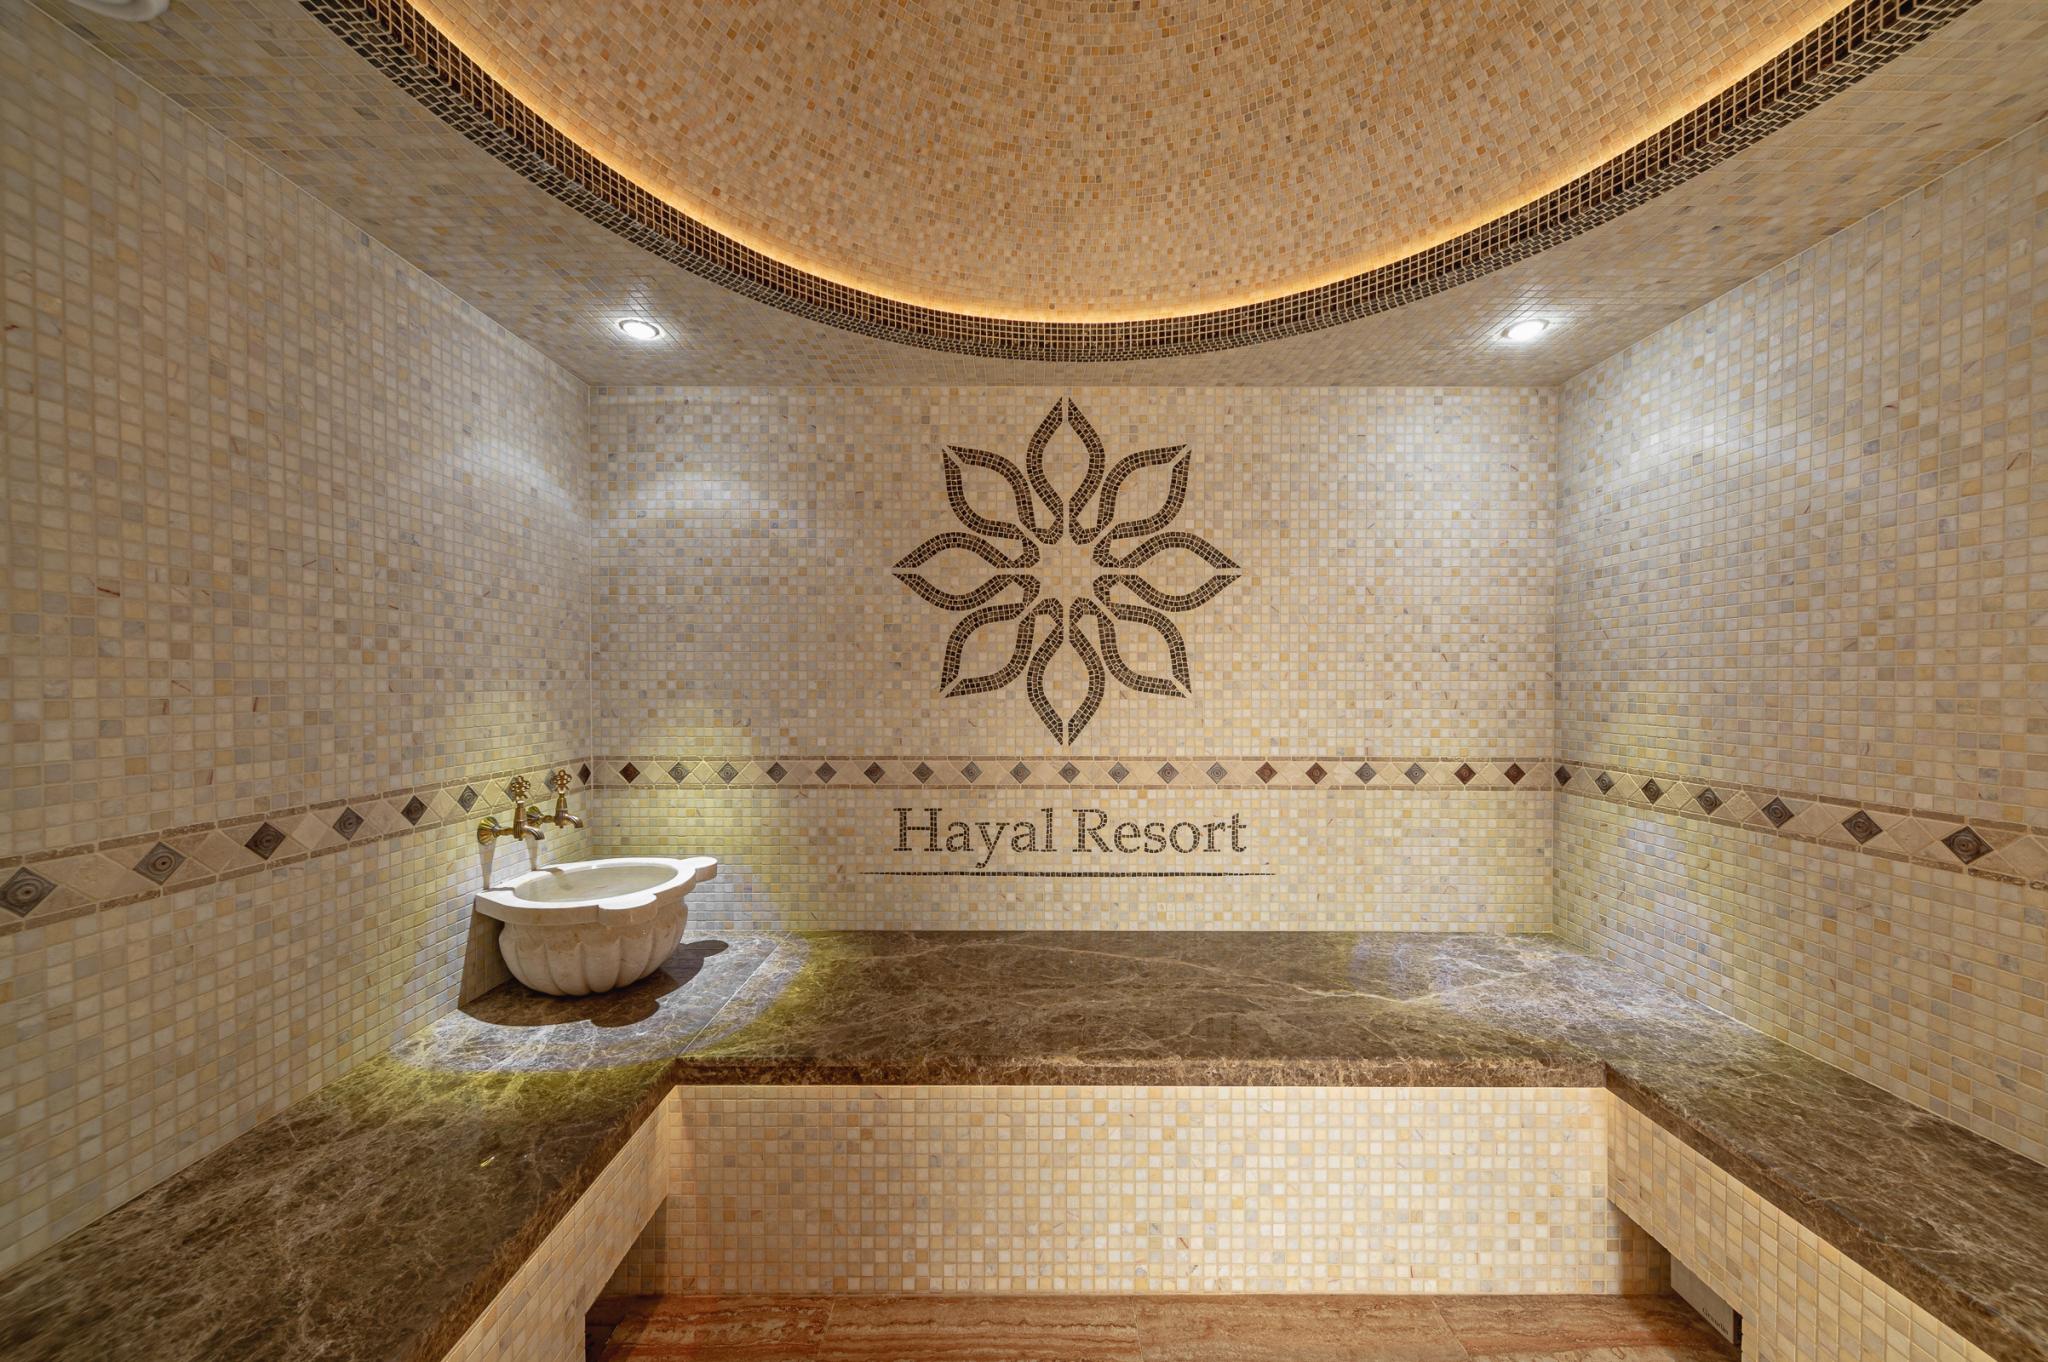 Хаял Резорт Алушта. Hayal Resort Алушта. Отель Хаял Резорт Ялта. Hayal Resort 4 спорт.